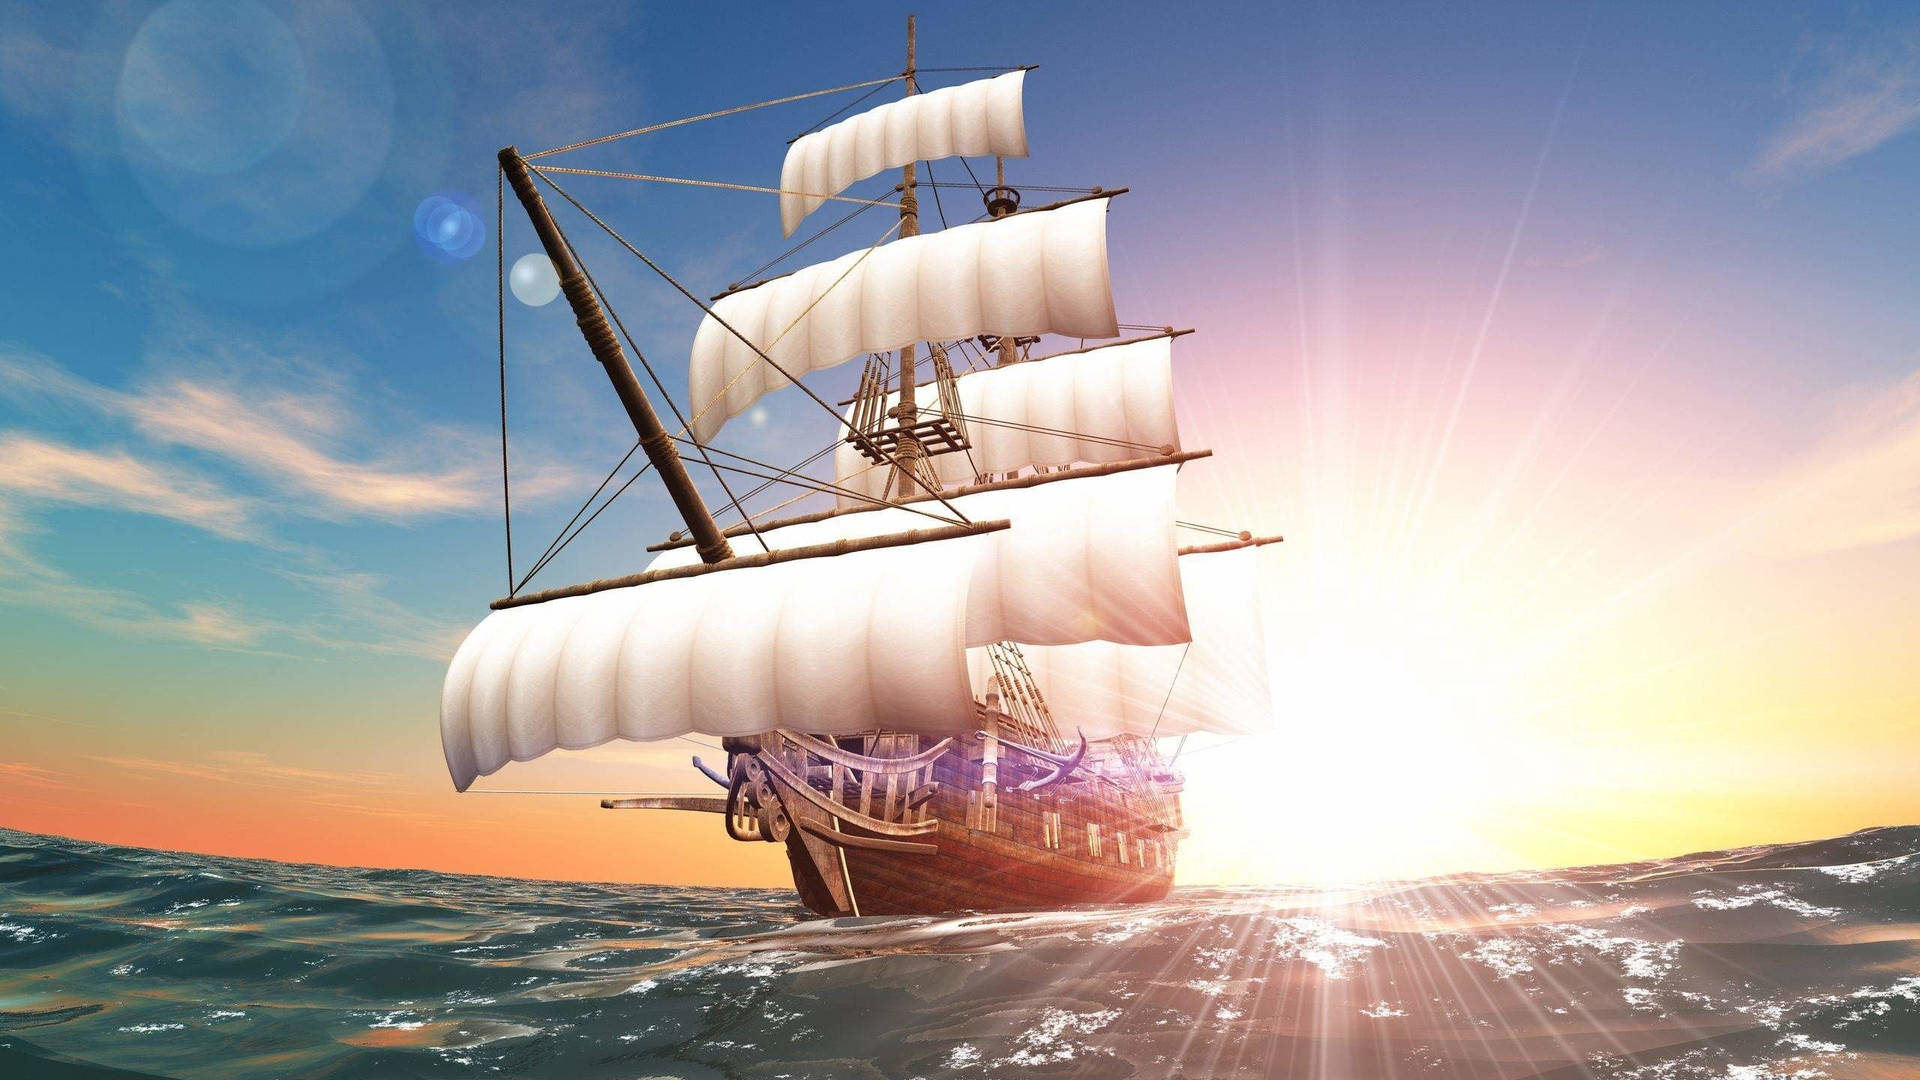 Sailing Ship Digital Art Wallpaper